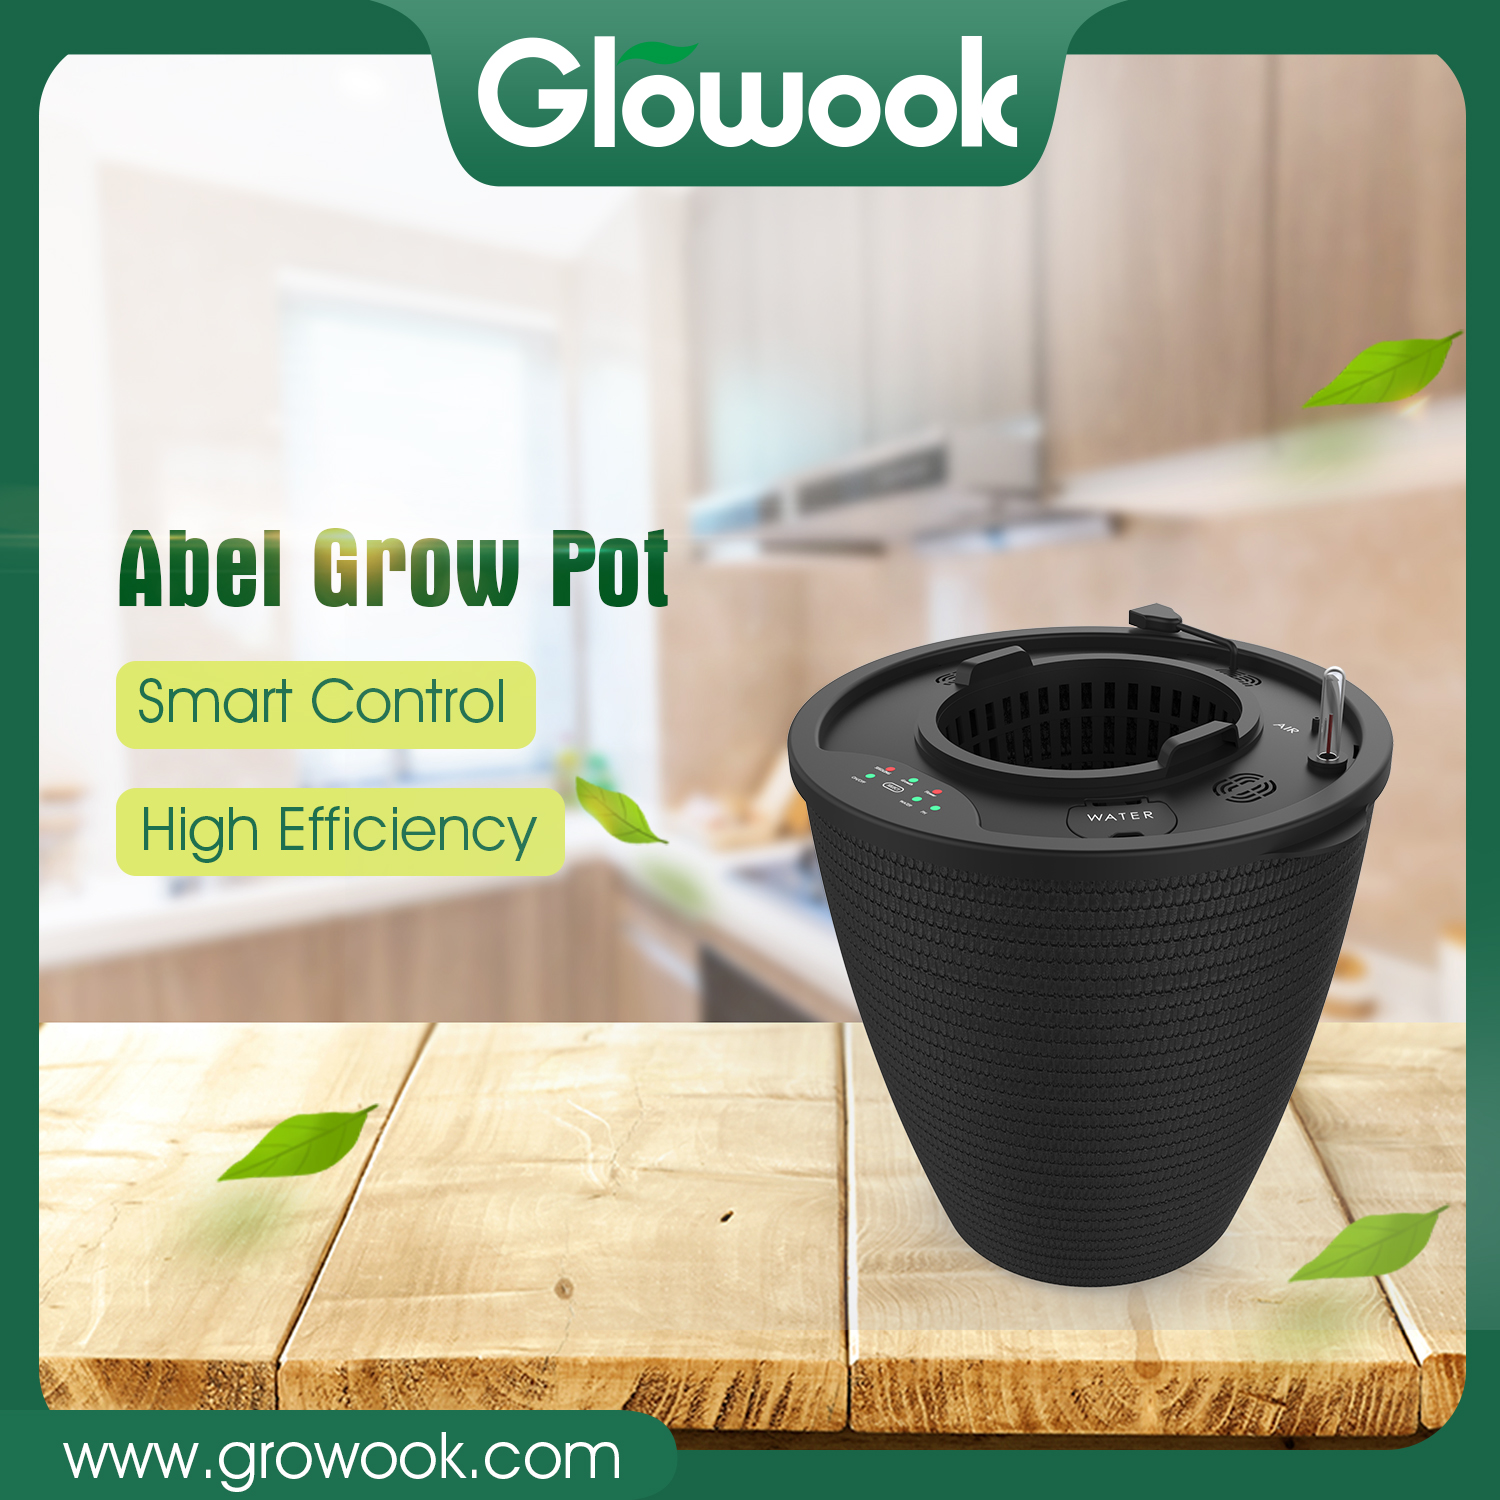 Abel Grow Pot Featured Image